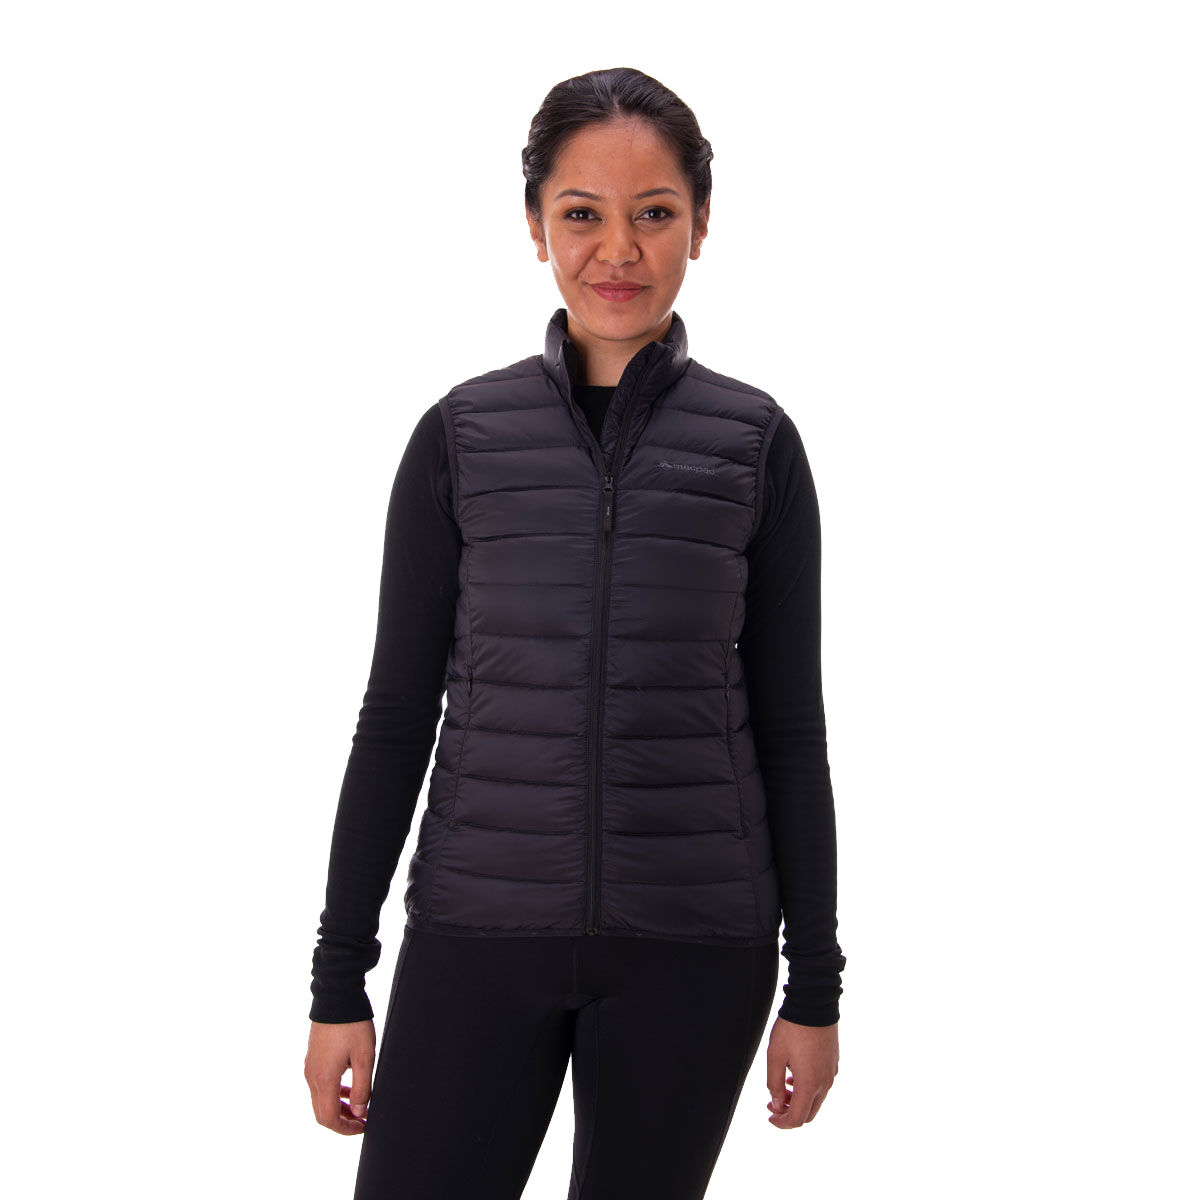 Avalanche fleece vest - KS Teamwear